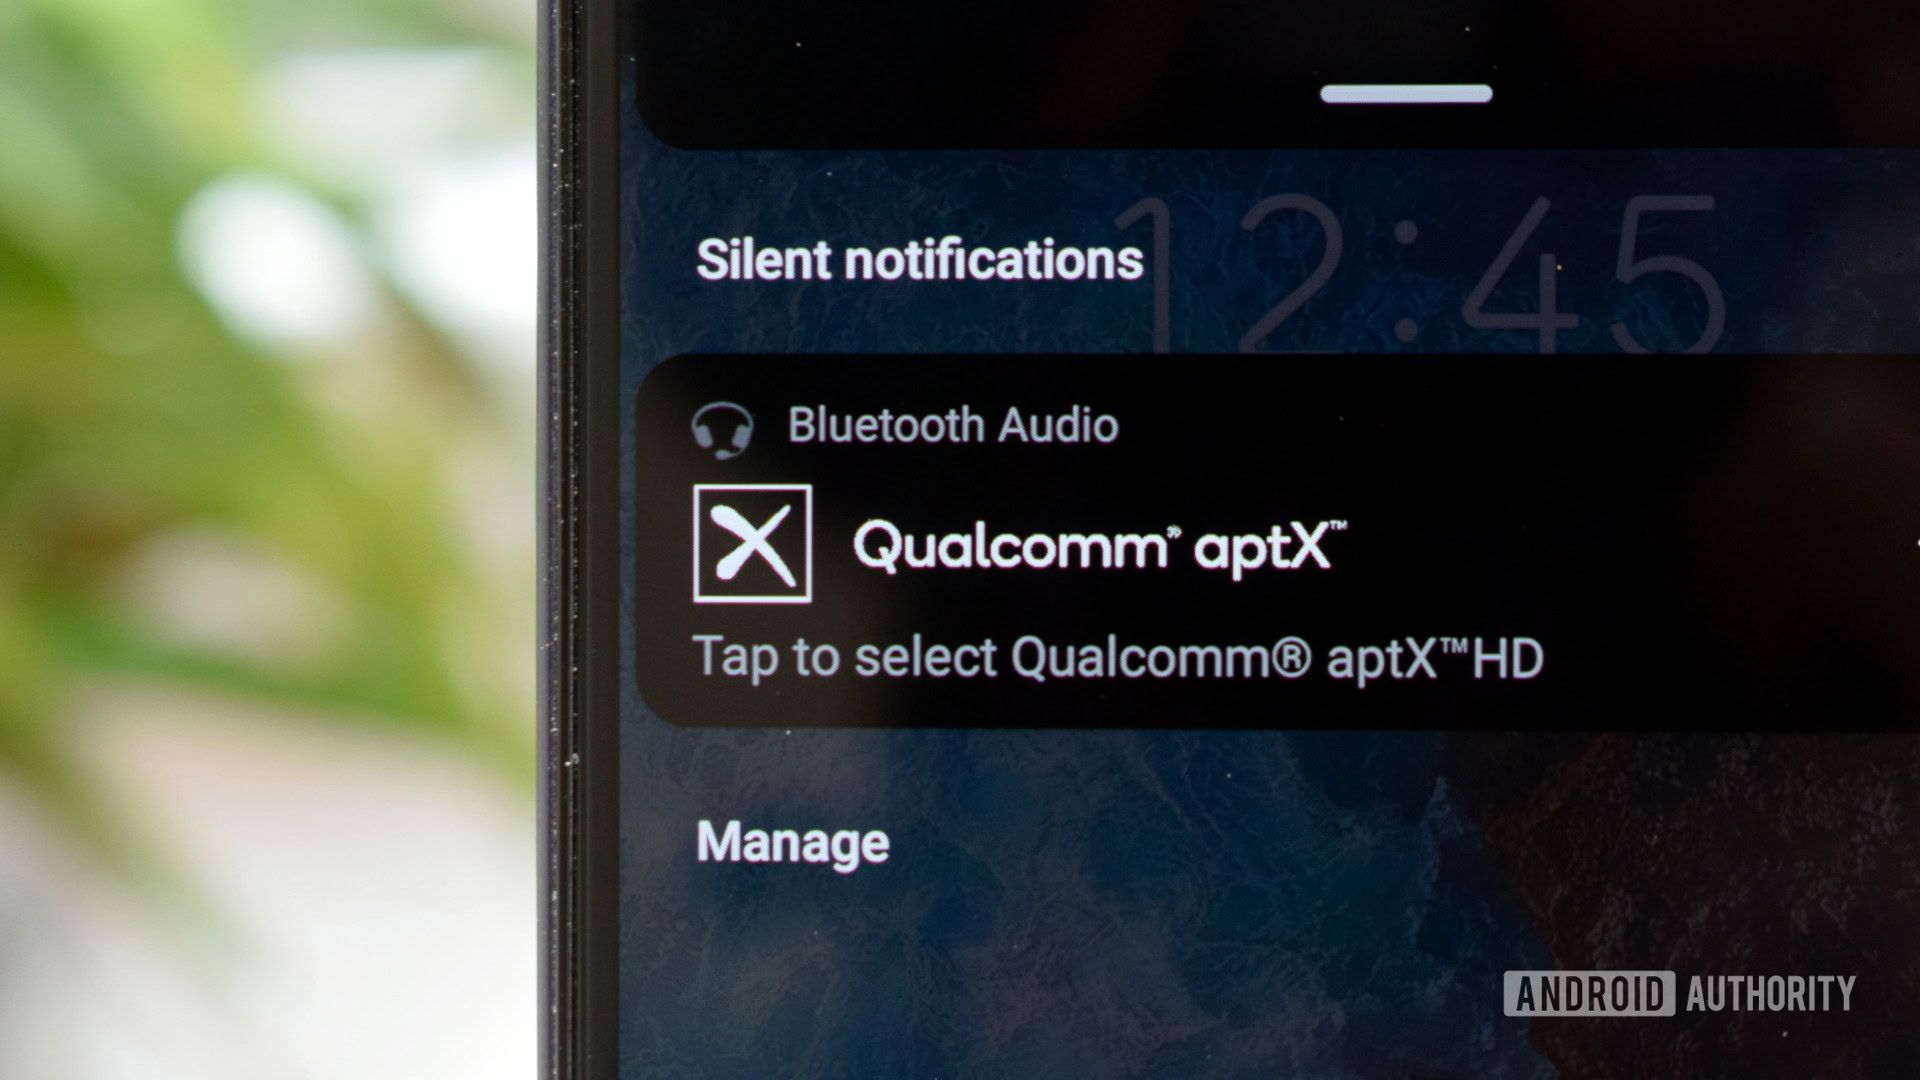 Qualcomm aptX phone notification up close